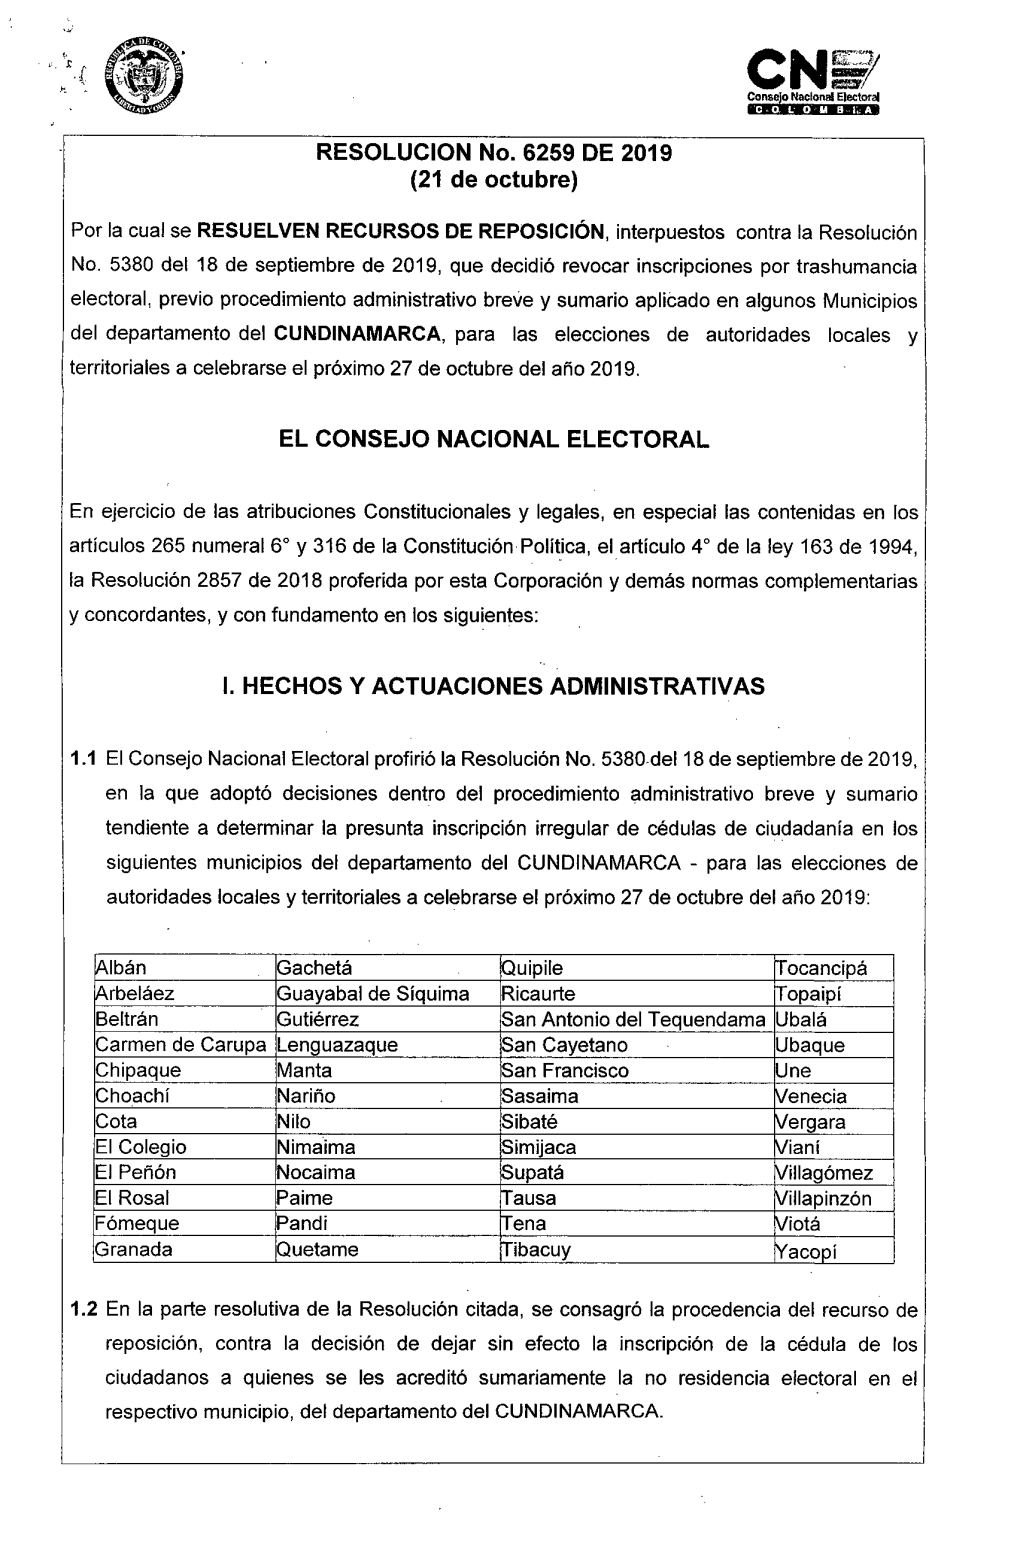 Res 6259-19 Recursos Cundinamarca (5380)